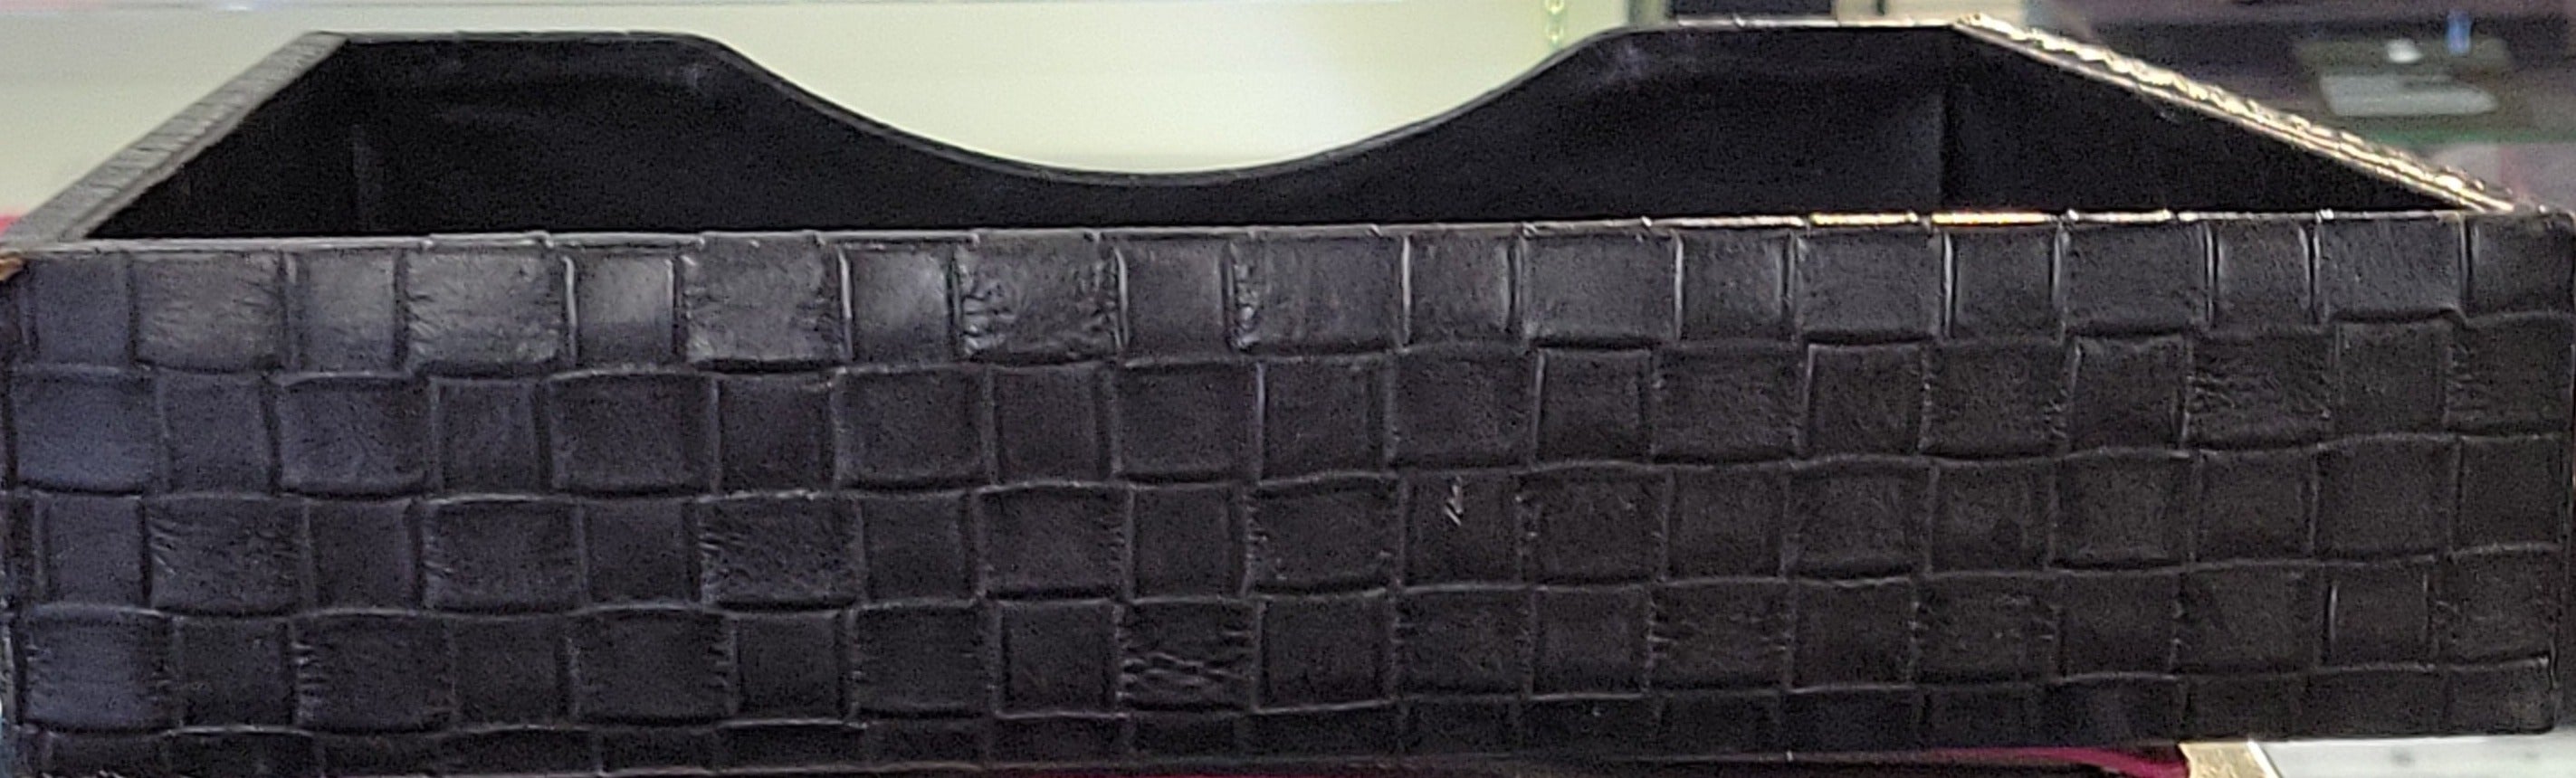 (Outlet) Bosca Letter Tray without Lid in Black Basket Weave-Pen Boutique Ltd